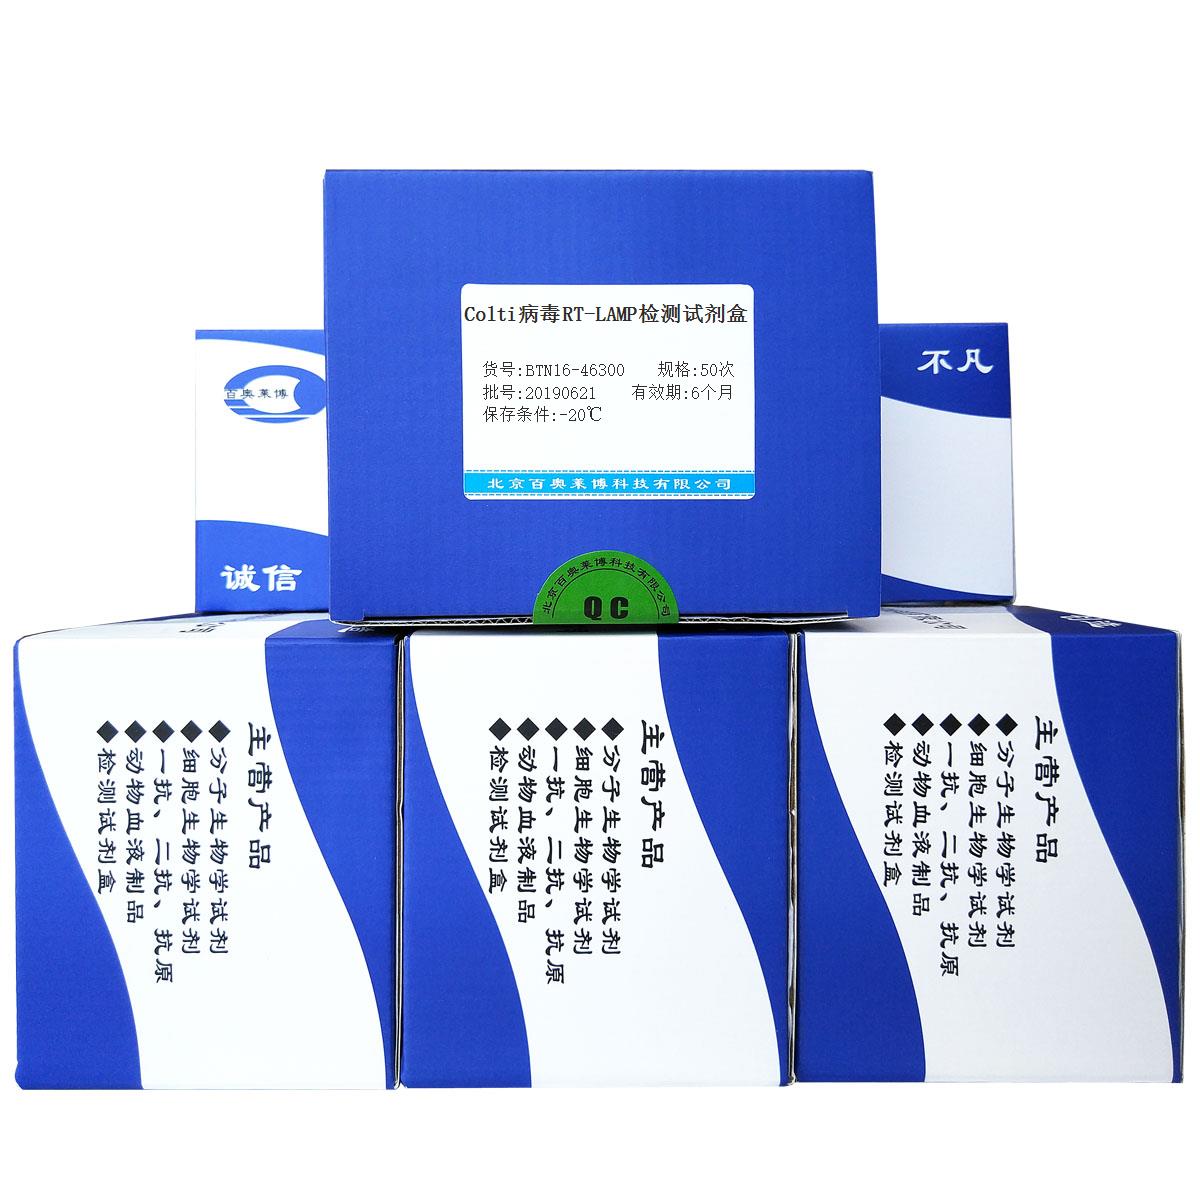 Colti病毒RT-LAMP检测试剂盒北京现货